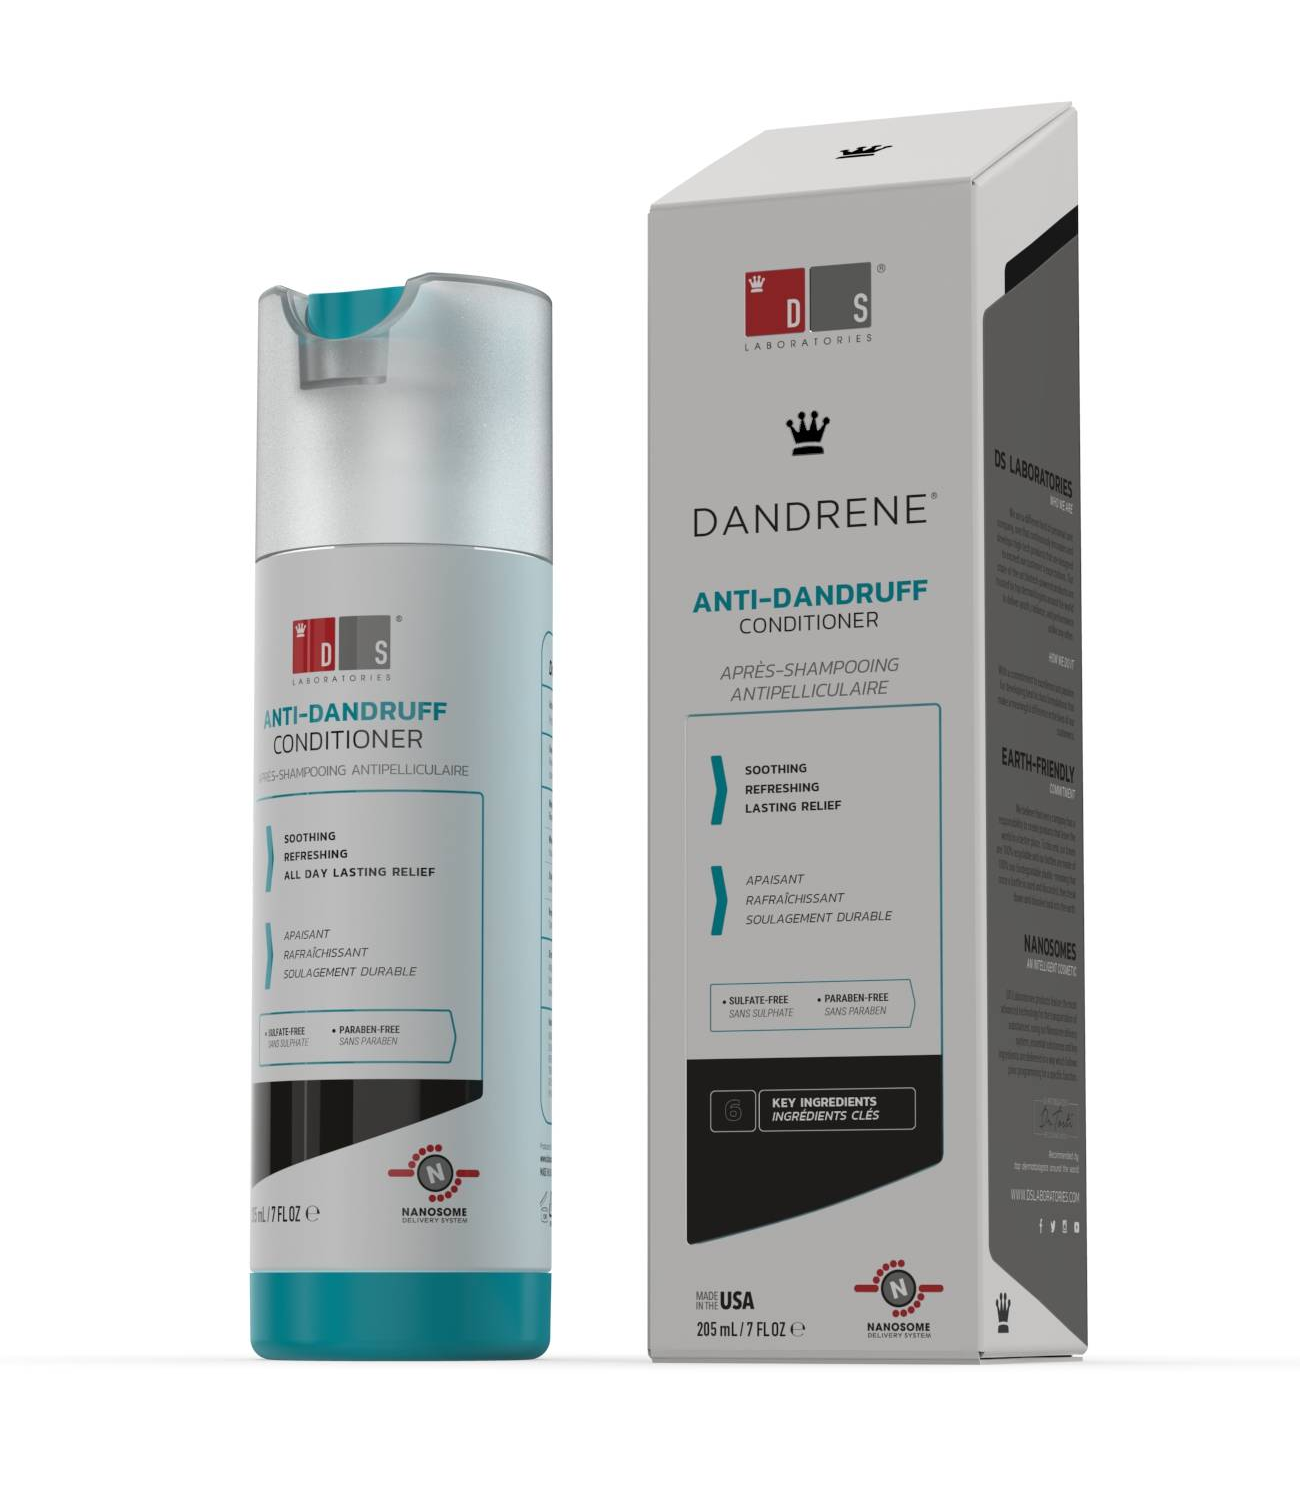 Dandrene | Exfoliating Anti-Dandruff Conditioner